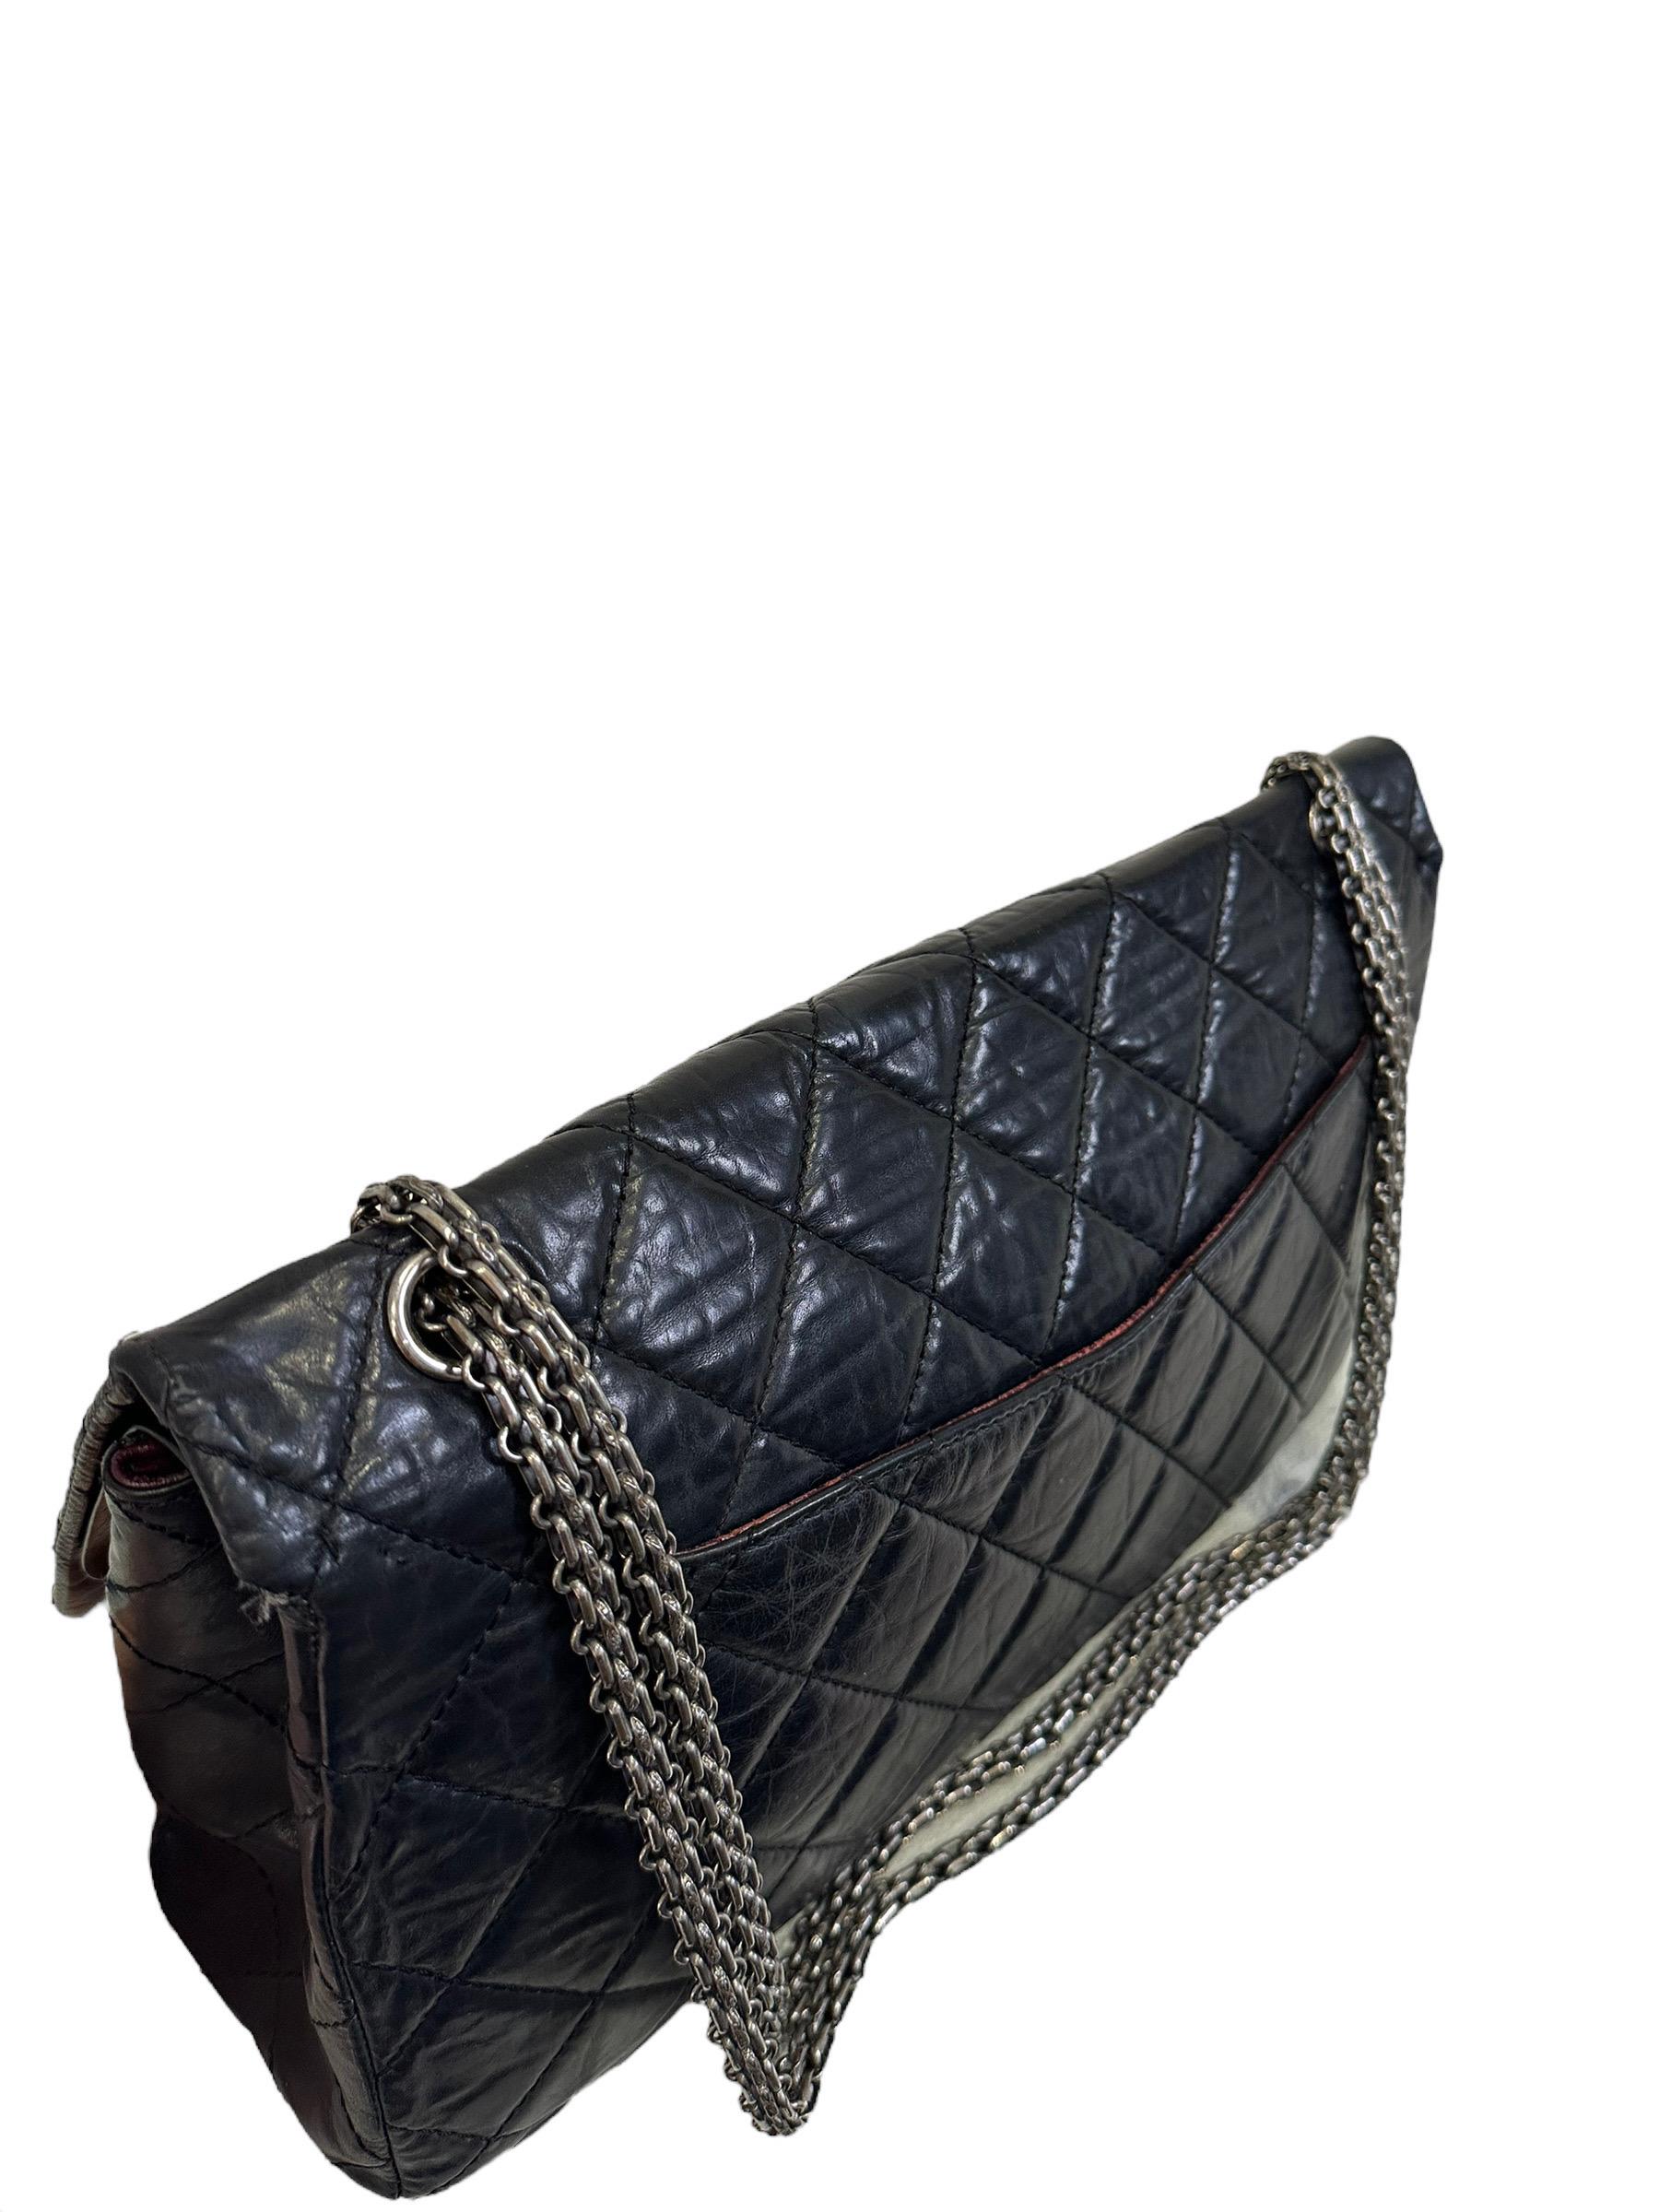 2008 Chanel Reissue Maxi Jumbo Blue Top Shoulder Bag For Sale 5